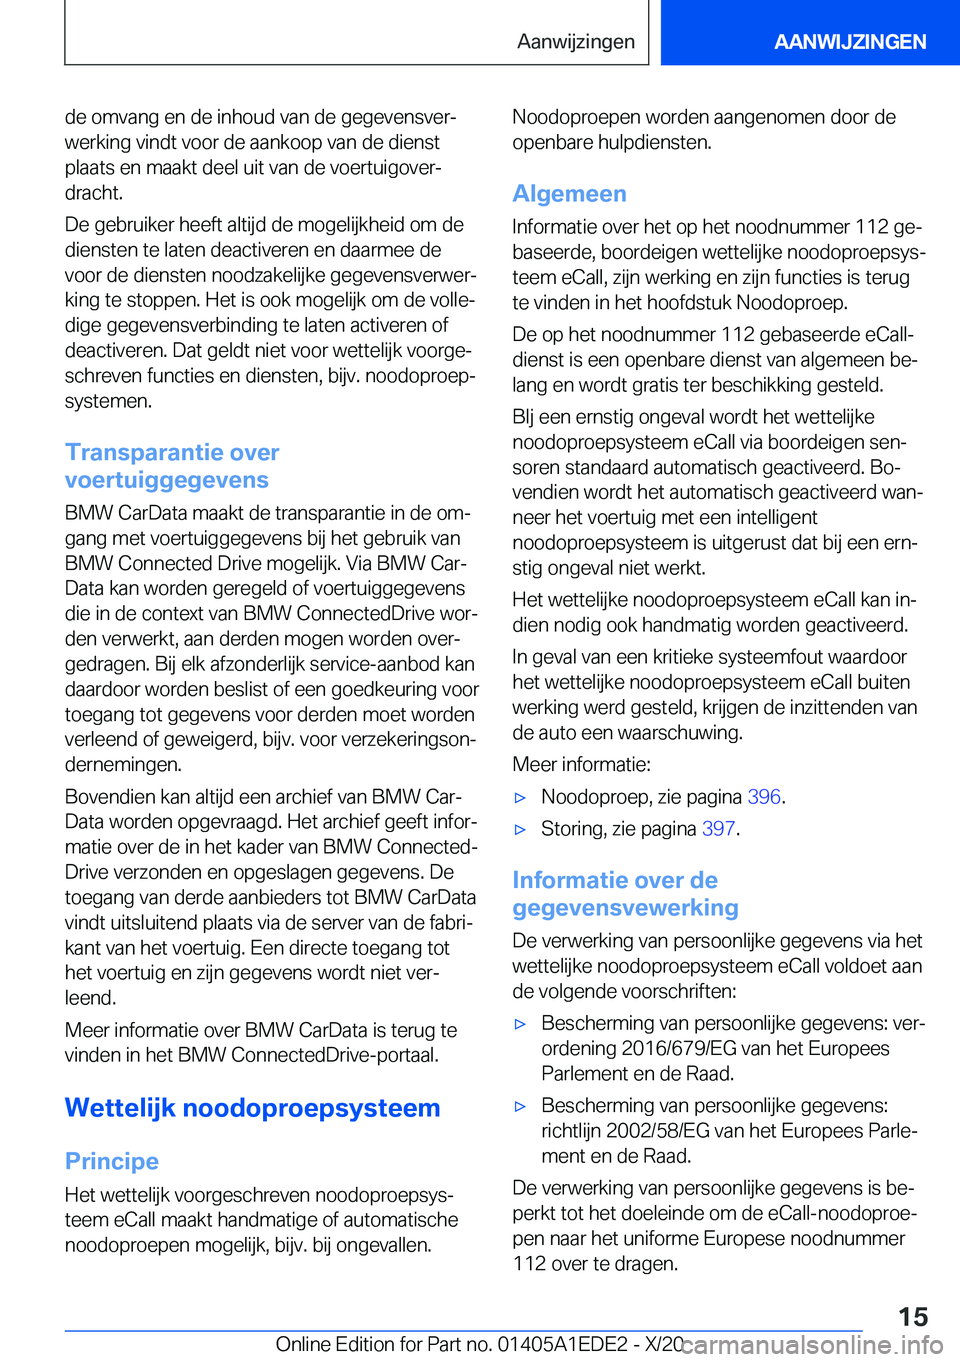 BMW 8 SERIES CONVERTIBLE 2021  Instructieboekjes (in Dutch) �d�e��o�m�v�a�n�g��e�n��d�e��i�n�h�o�u�d��v�a�n��d�e��g�e�g�e�v�e�n�s�v�e�rj�w�e�r�k�i�n�g��v�i�n�d�t��v�o�o�r��d�e��a�a�n�k�o�o�p��v�a�n��d�e��d�i�e�n�s�t
�p�l�a�a�t�s��e�n��m�a�a�k�